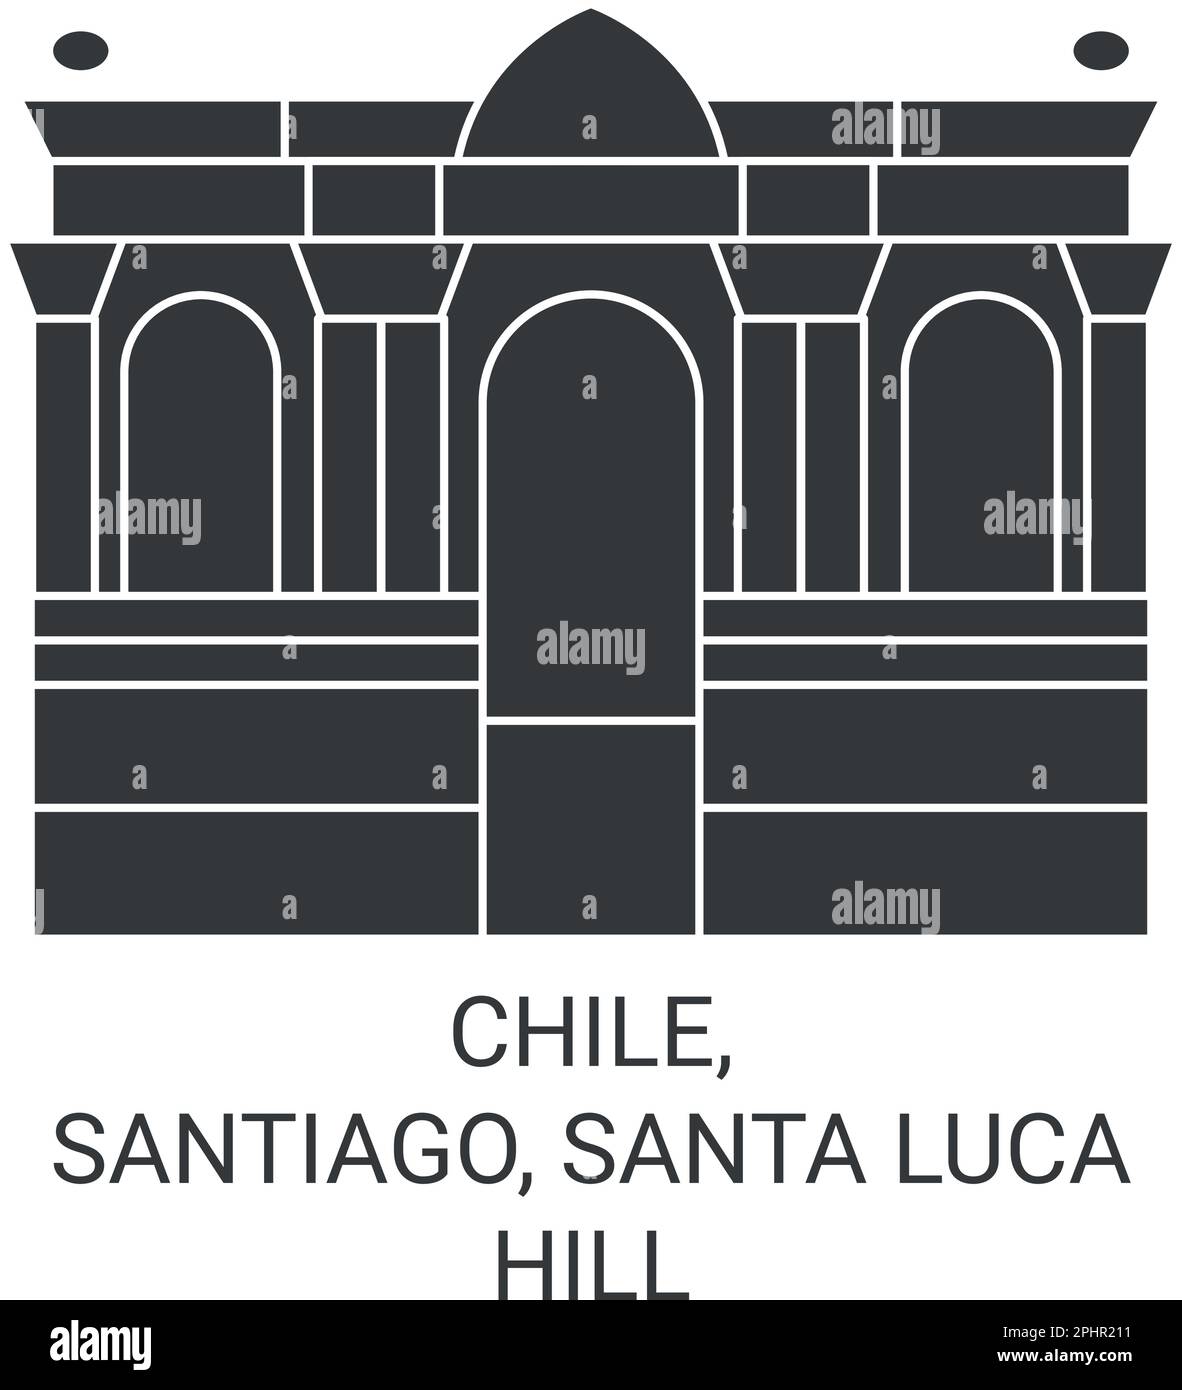 Chile, Santiago, Santa Luca Hill travel landmark vector illustration Stock Vector